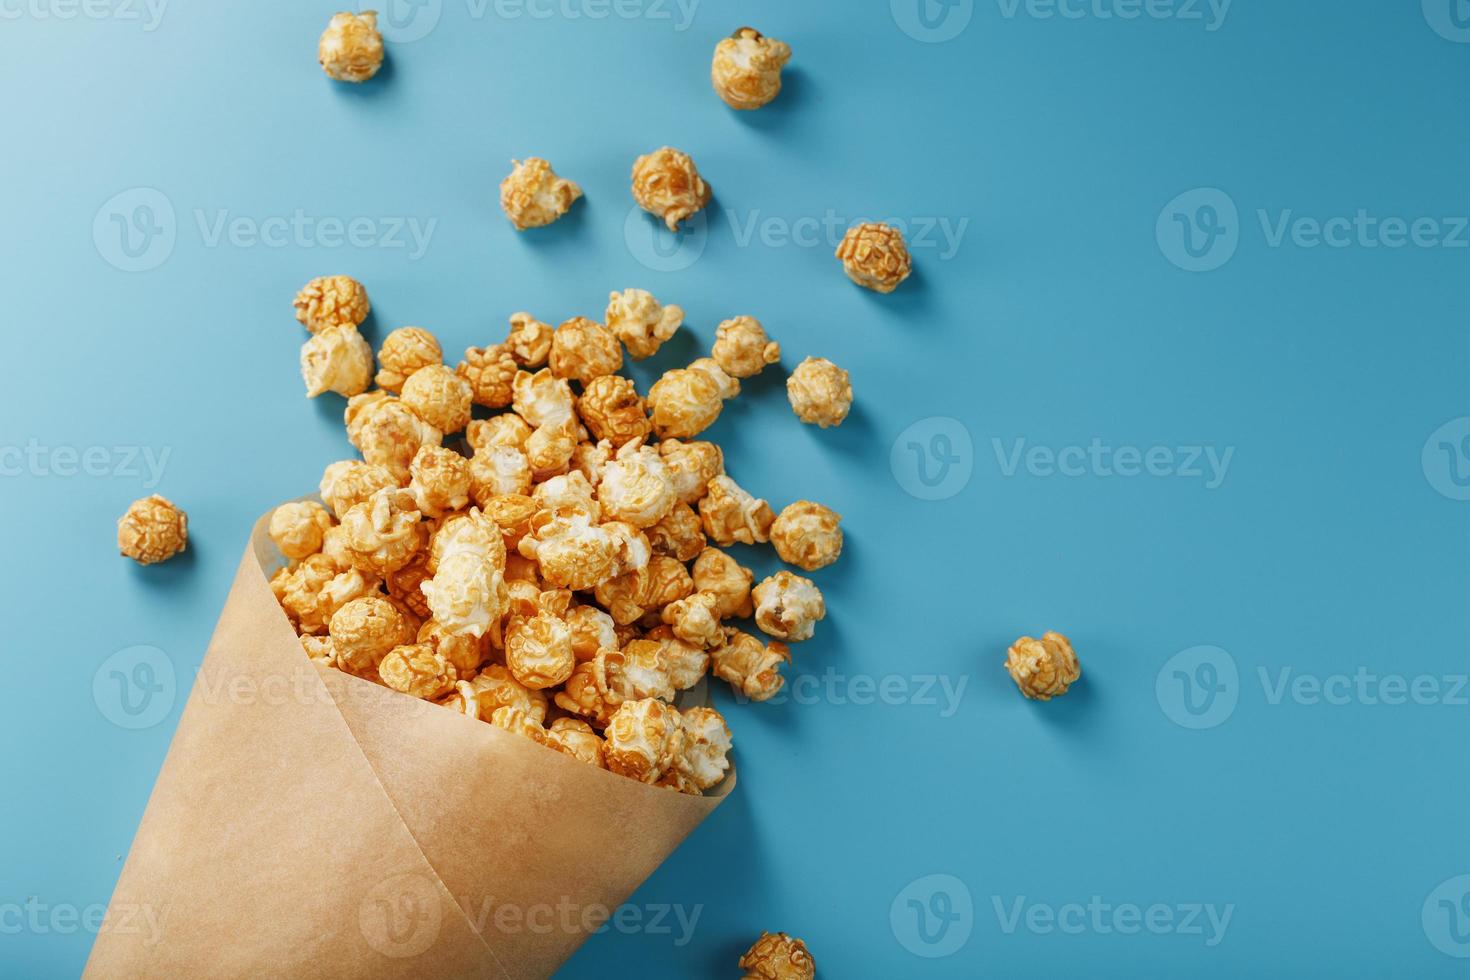 Popcorn in caramel glaze in a paper envelope on a blue background. photo